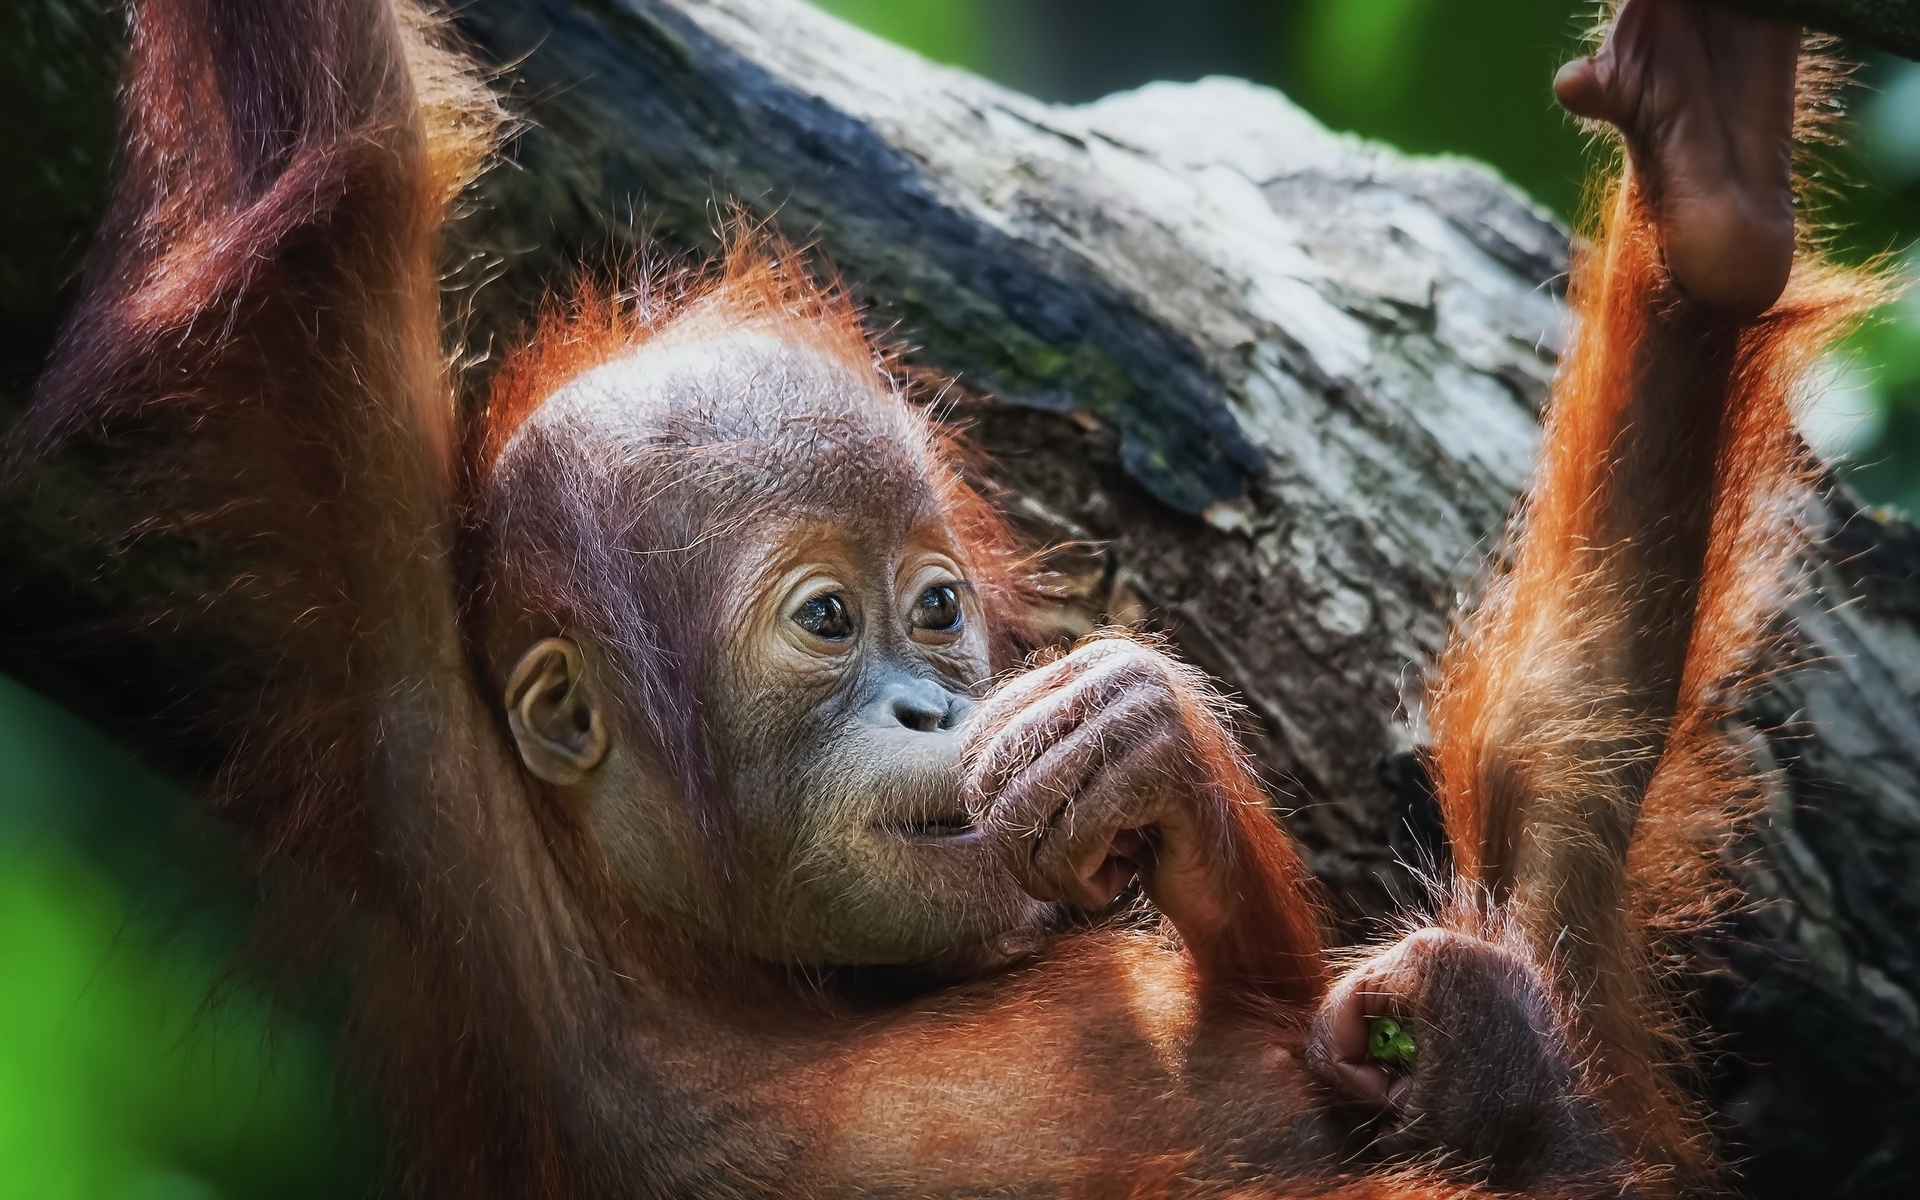 fond d'écran orang outan,orang outan,primate,animal terrestre,humain,chimpanzé commun